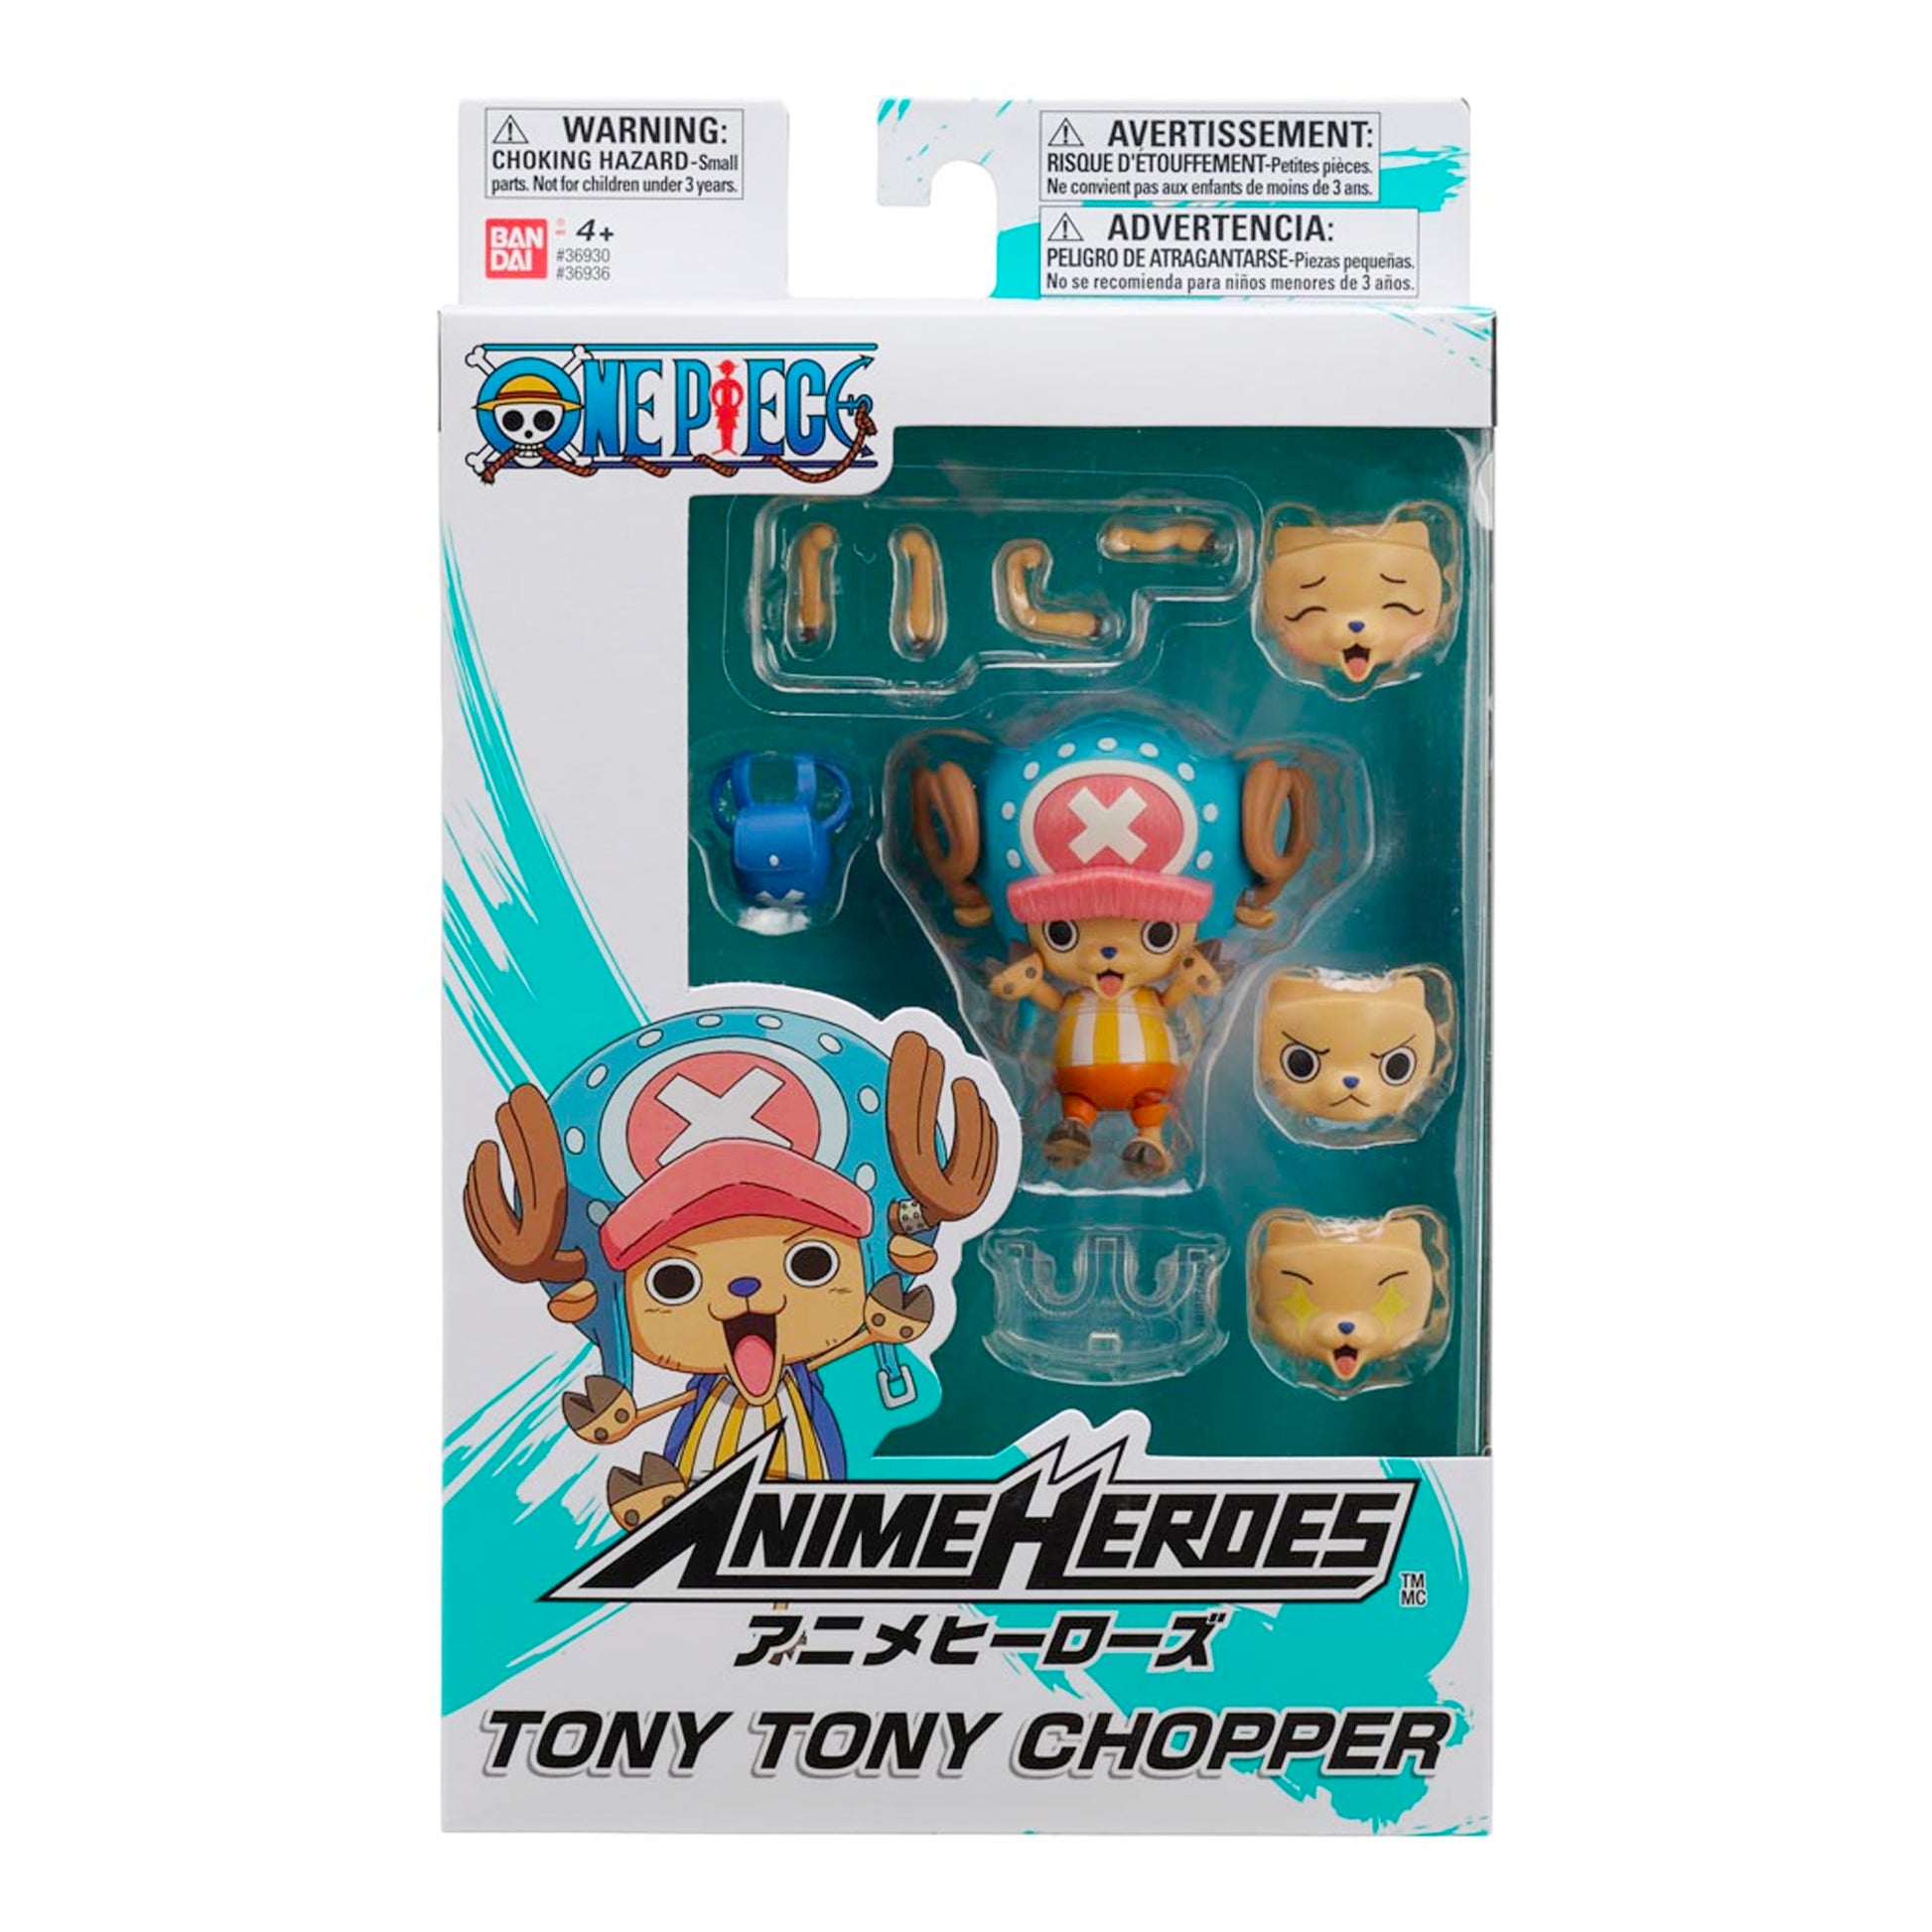 ANIME HEROES - One Piece - Tony Tony Chopper Action Figure